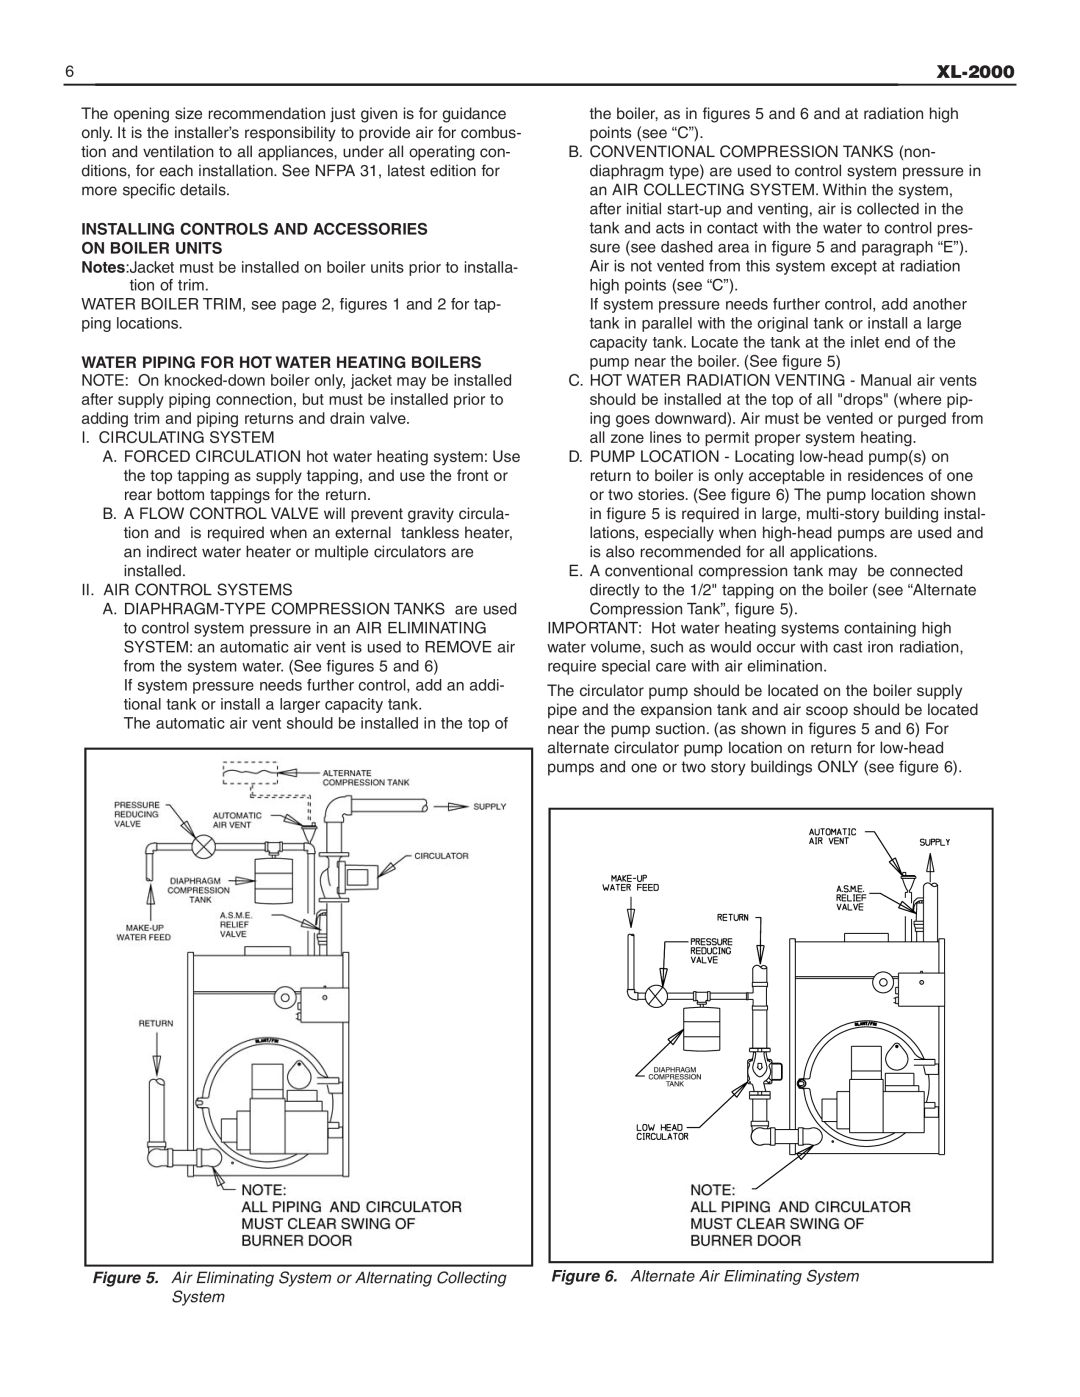 Slant/Fin XL-2000 dimensions Alternate Air Eliminating System 